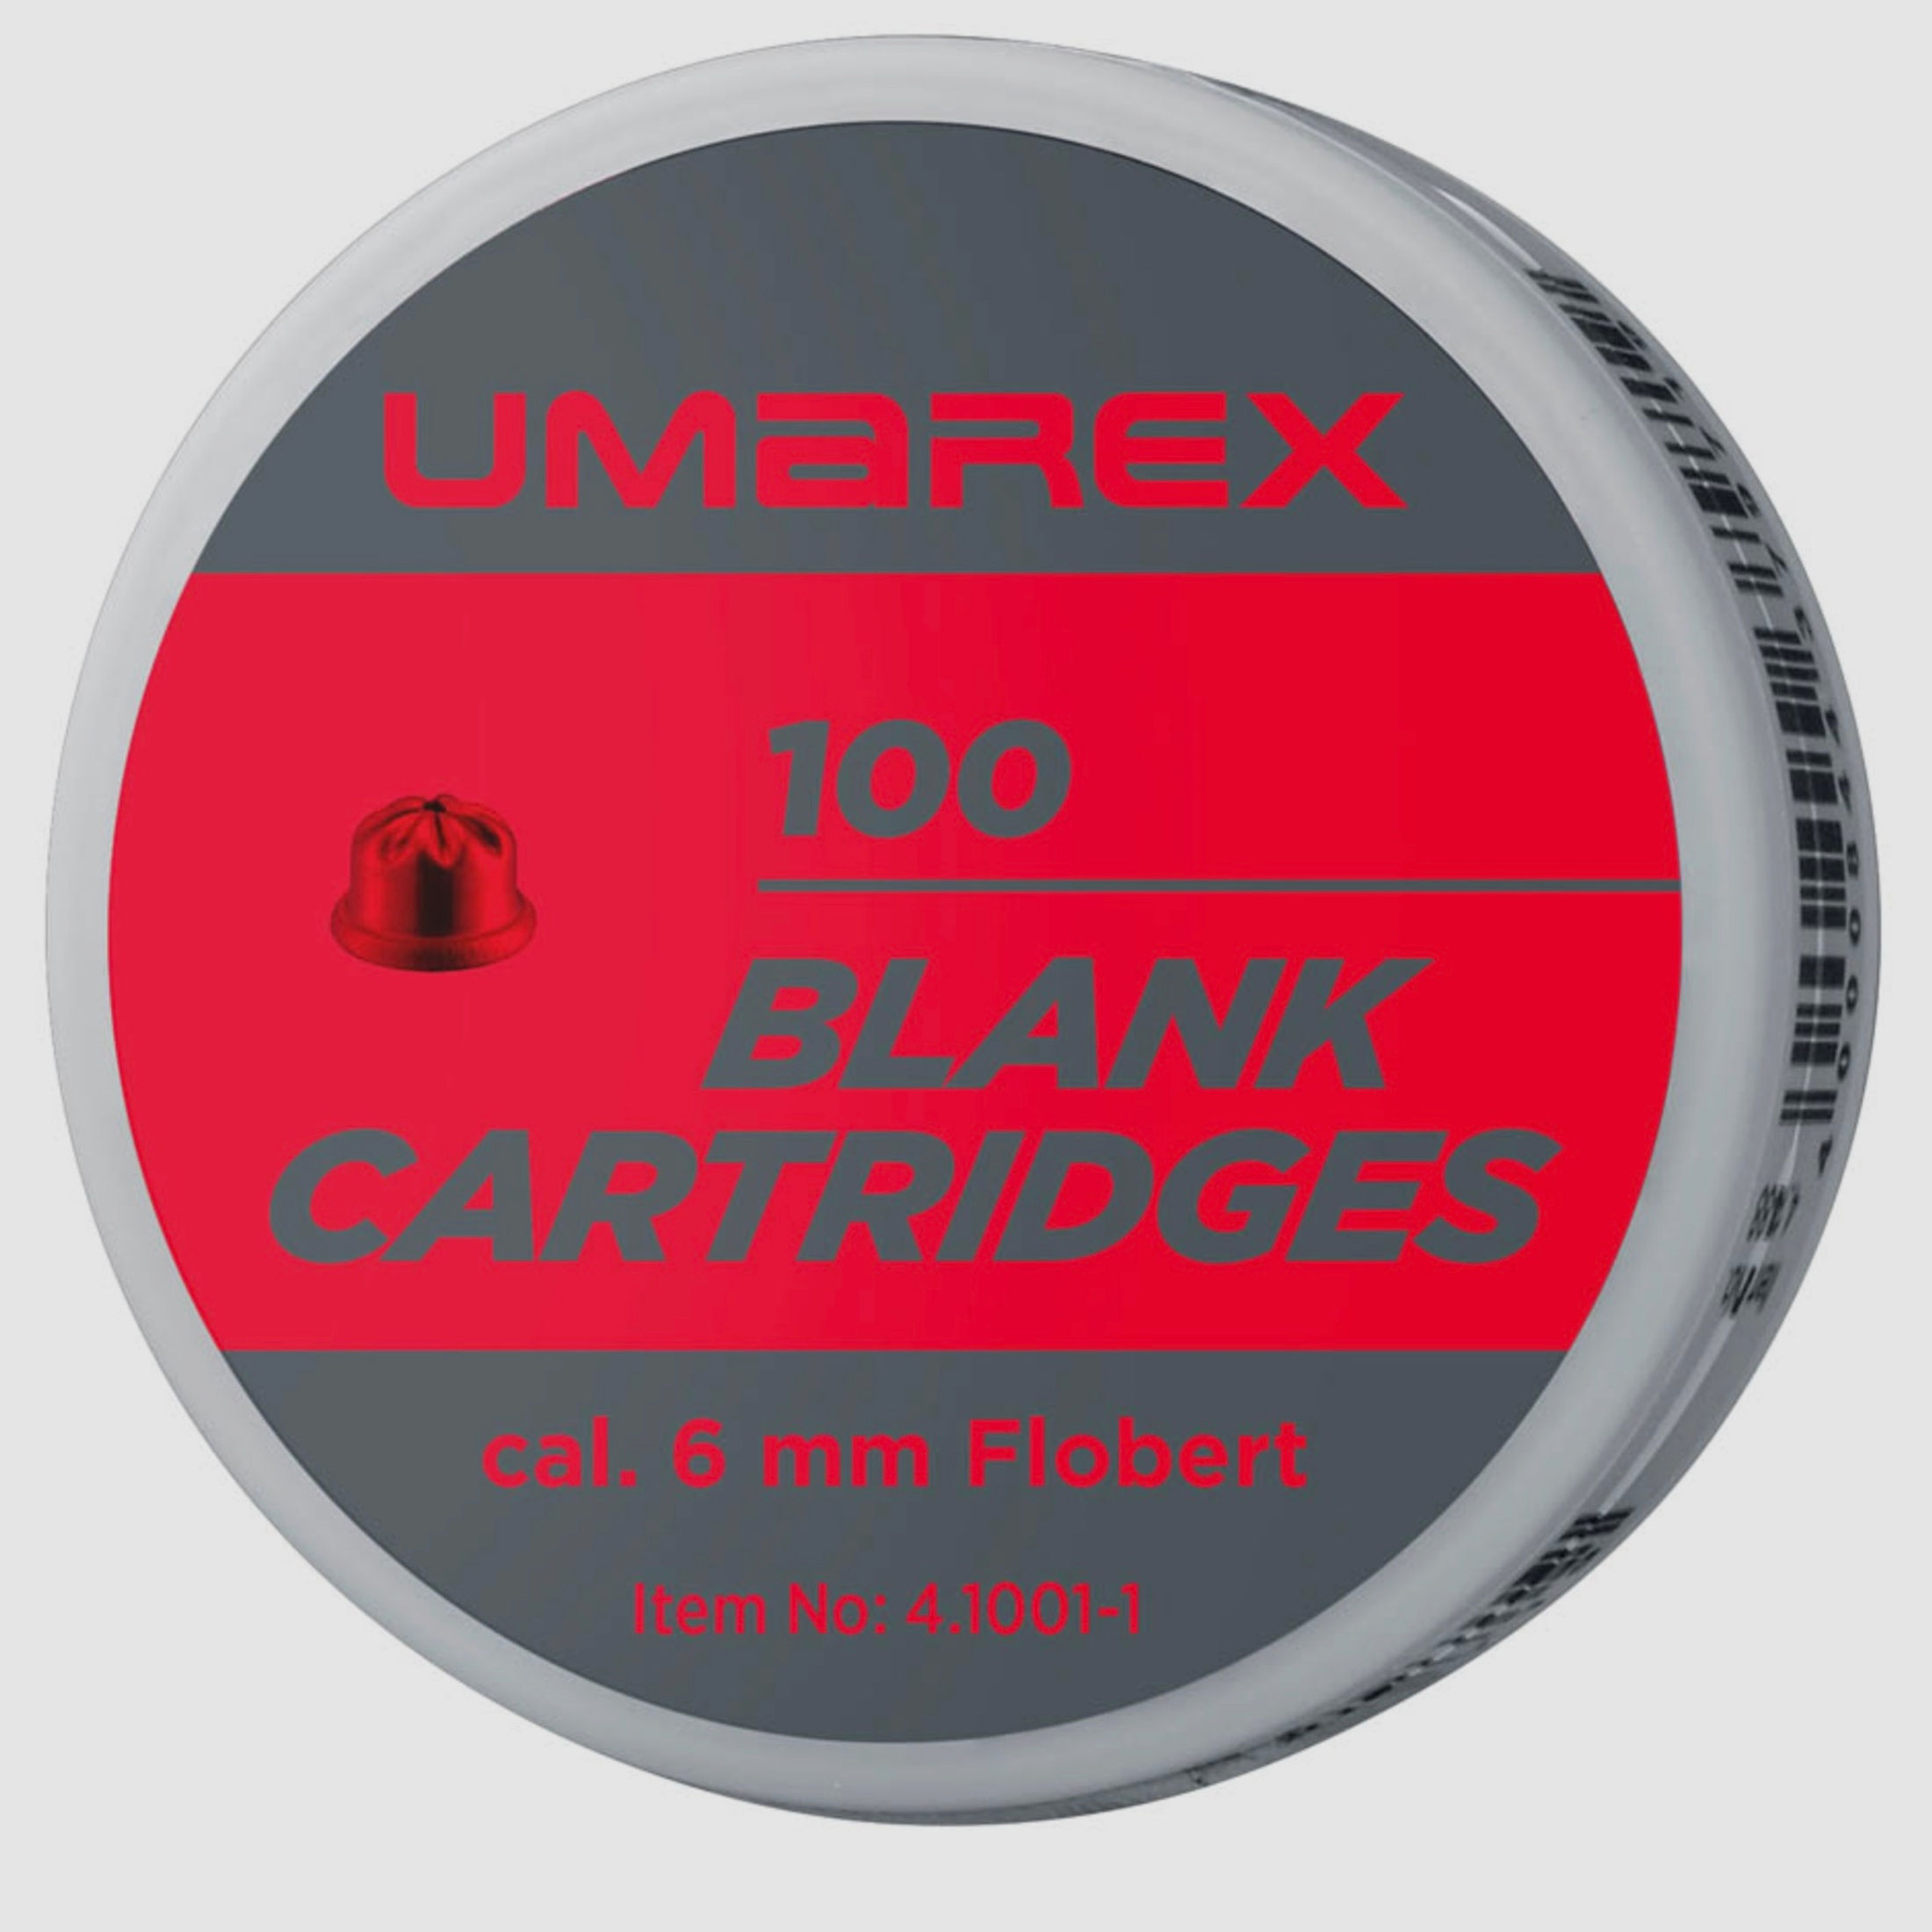 Umarex 4.1001-1 6 mm Flobert Knallpatronen 100 Stück für Schreckschusswaffen Pyro